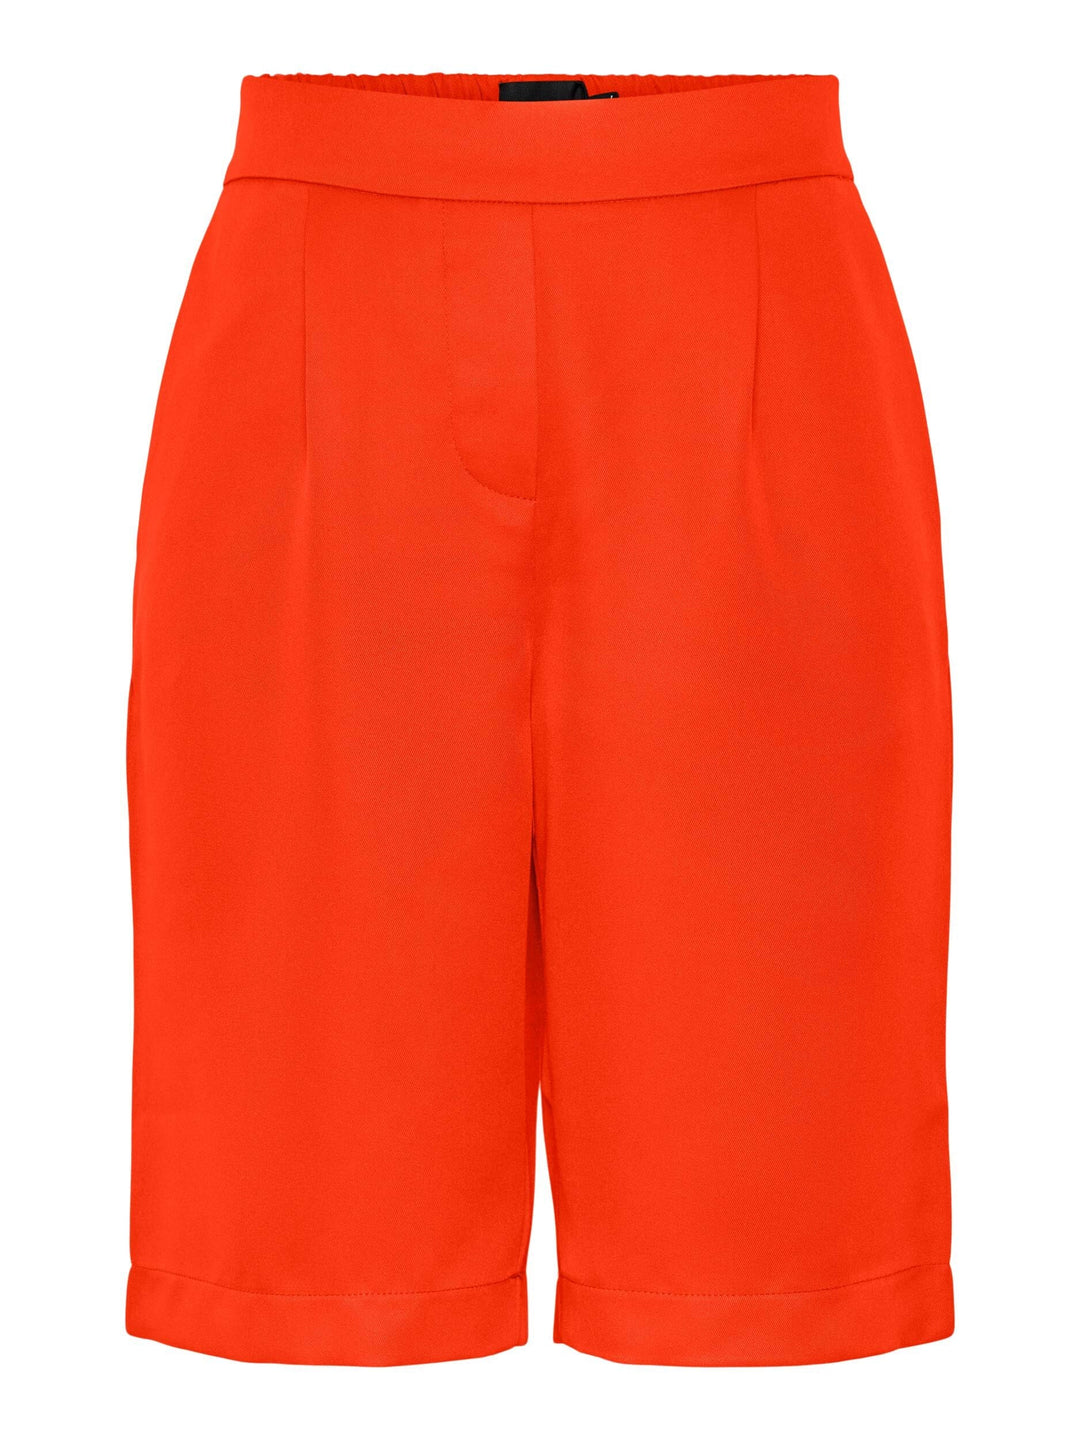 Pieces - Pctally Hw Shorts - Tangerine Tango Shorts 